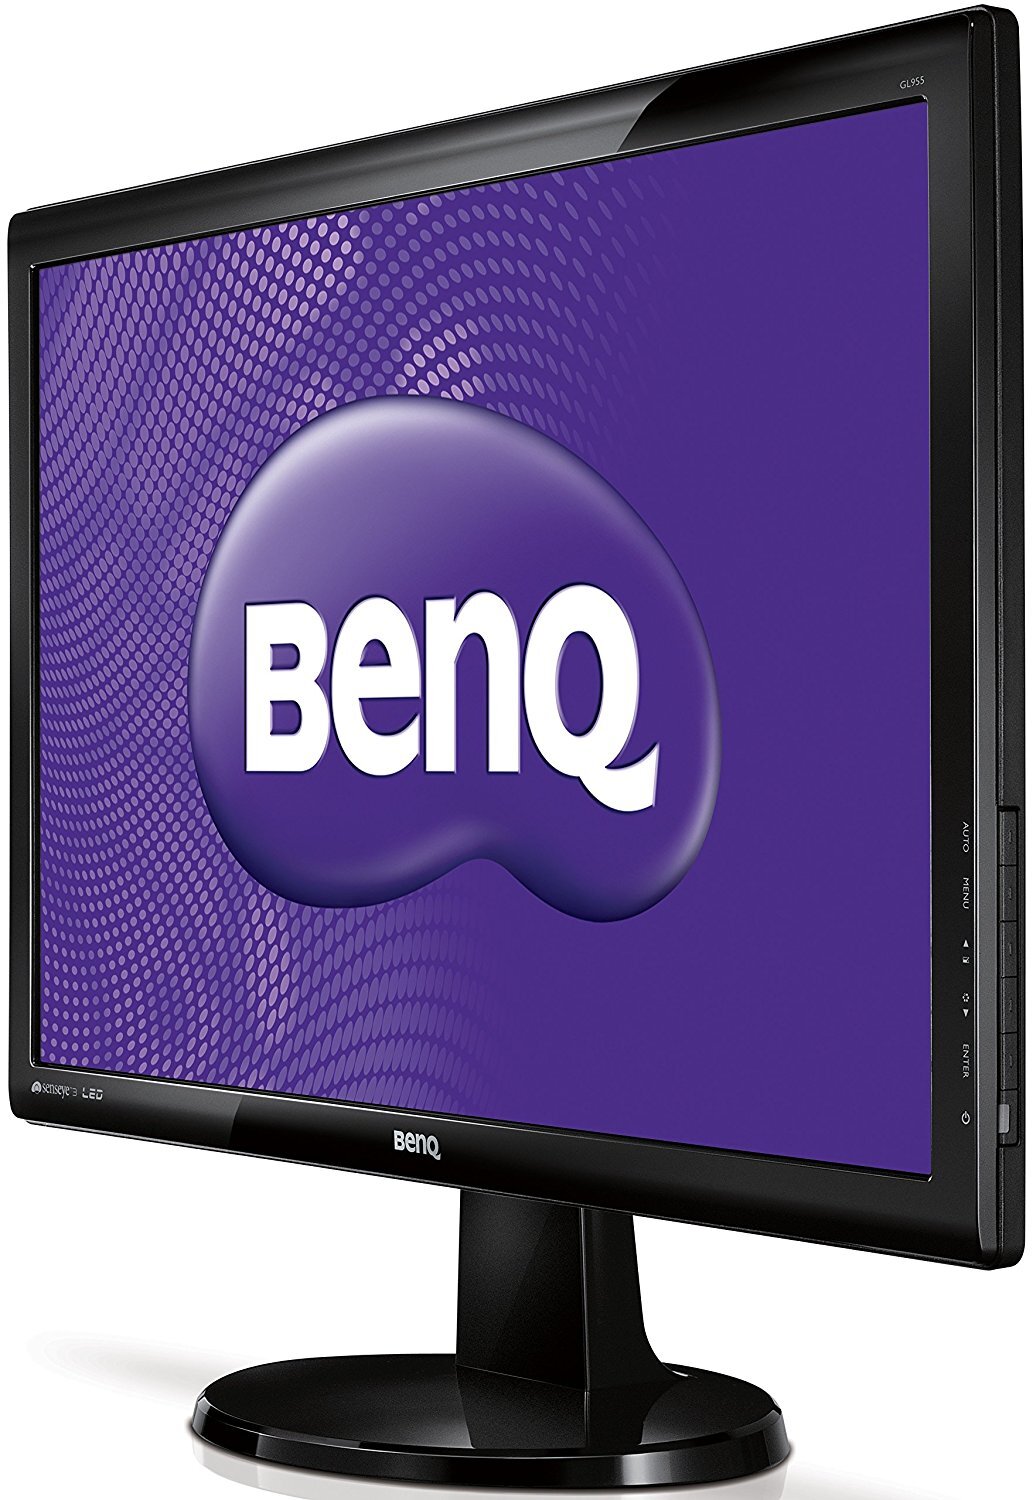 BenQ Professional GL955A LED 18.5" Computer Monitor HuntOffice.co.uk